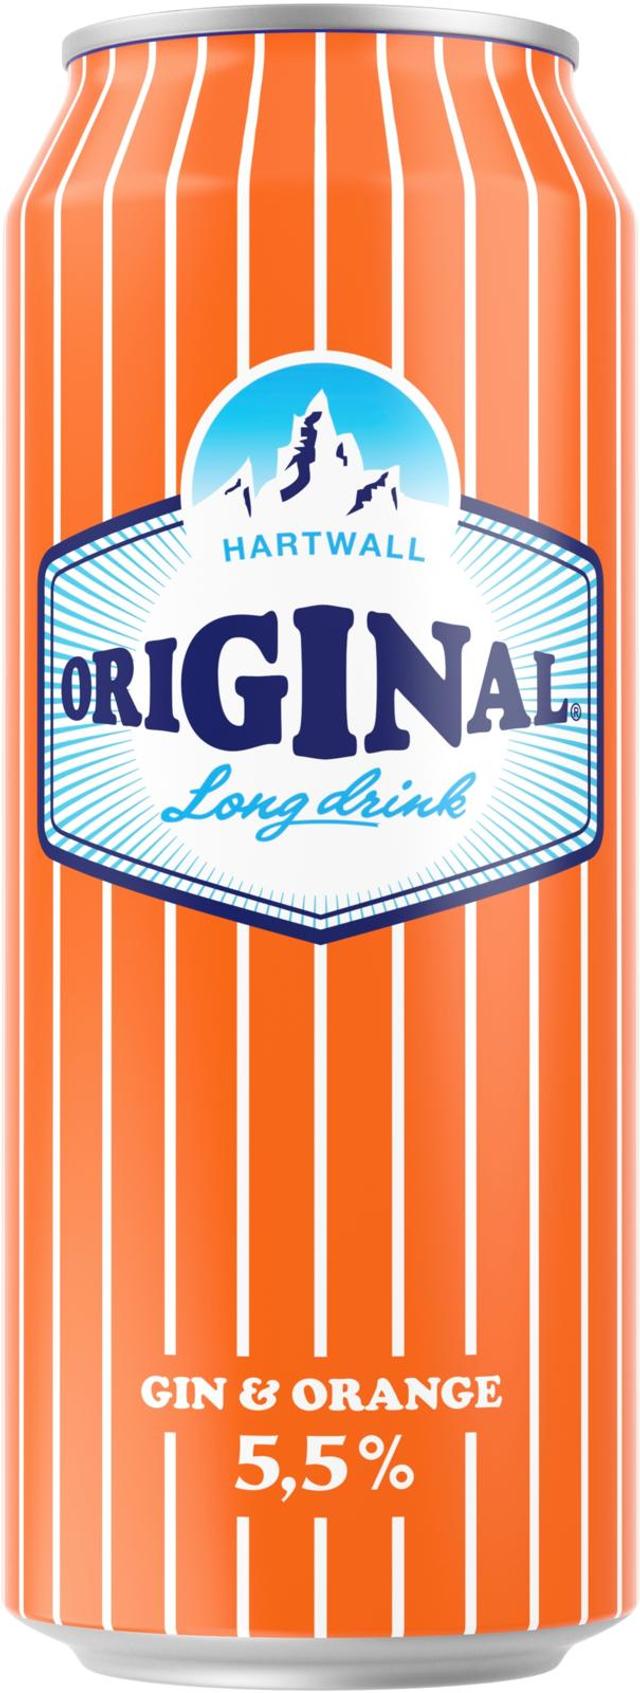 Hartwall Original Long Drink Orange 5,5% 0,5 l